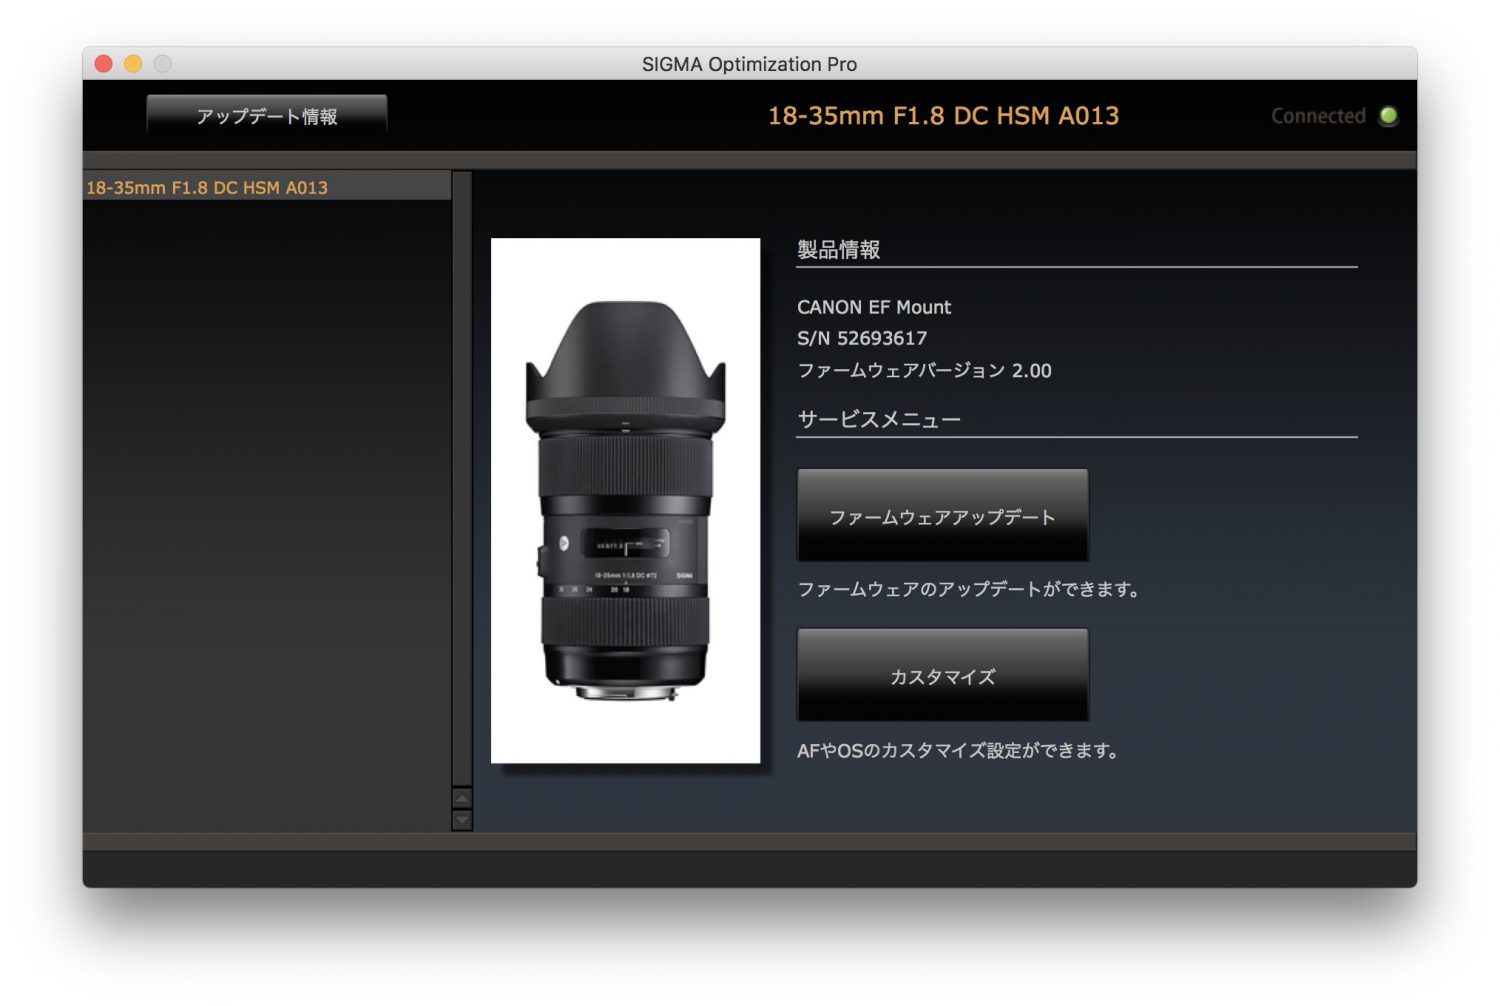 Sigma 17-70mm DC Macro OS HSM 35mm f1.4  /& 120-300mm f2.8 Nikon Lens USB Dock